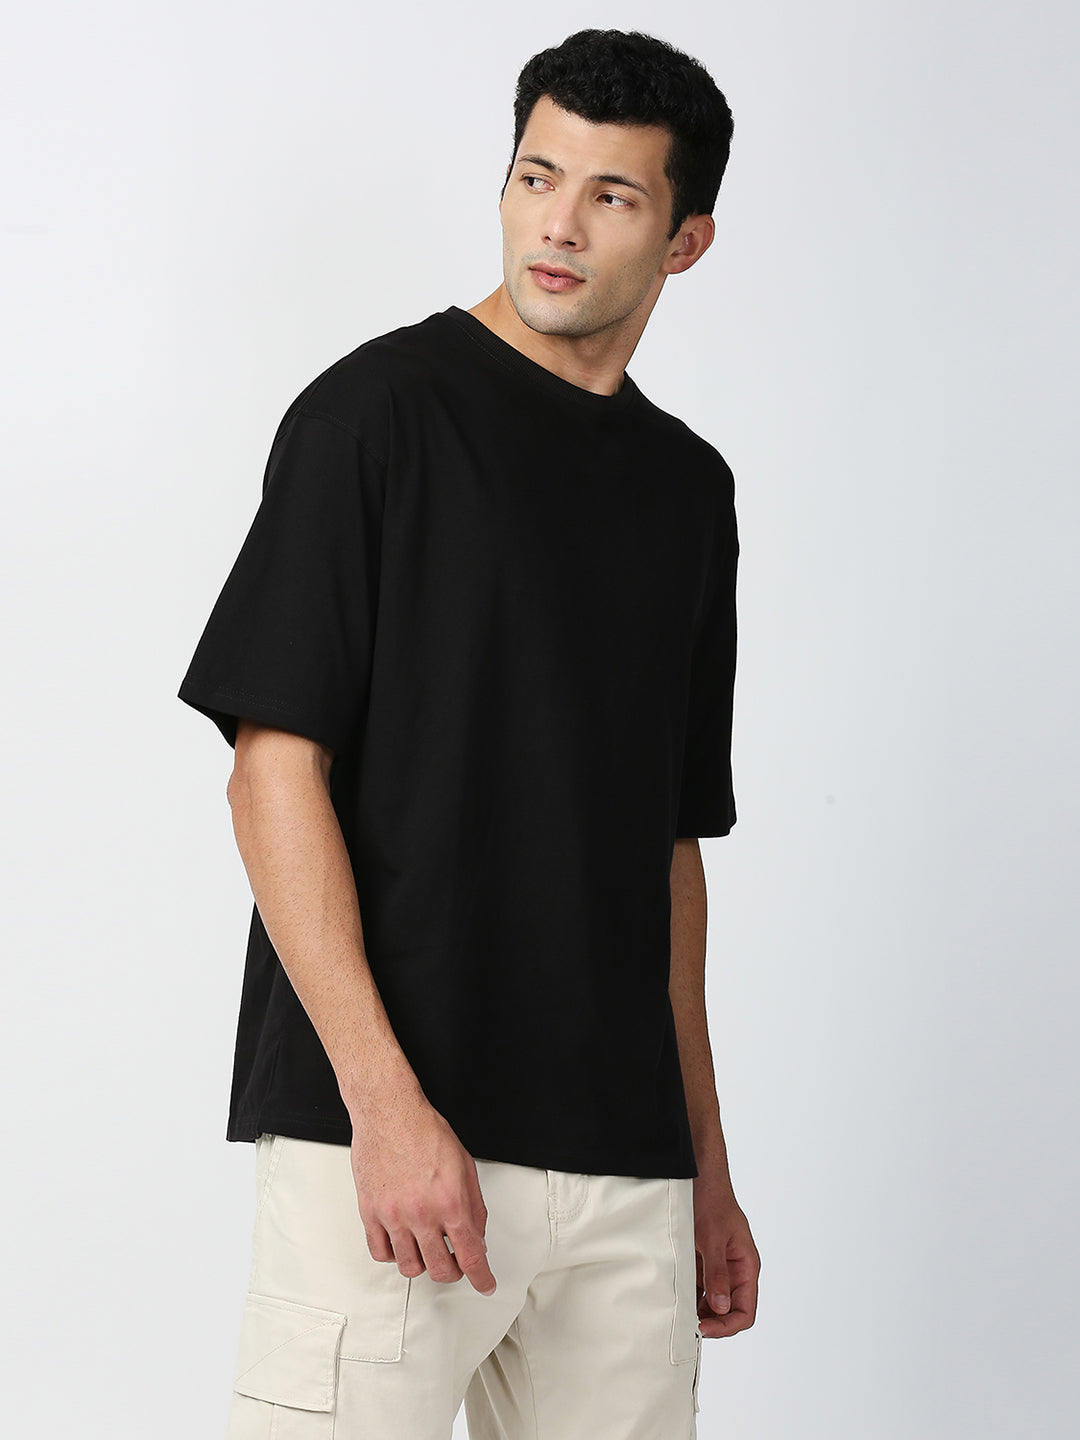 Buy Blamblack Men's Baggy Black Color Back Printed Round Neck T-Shirt